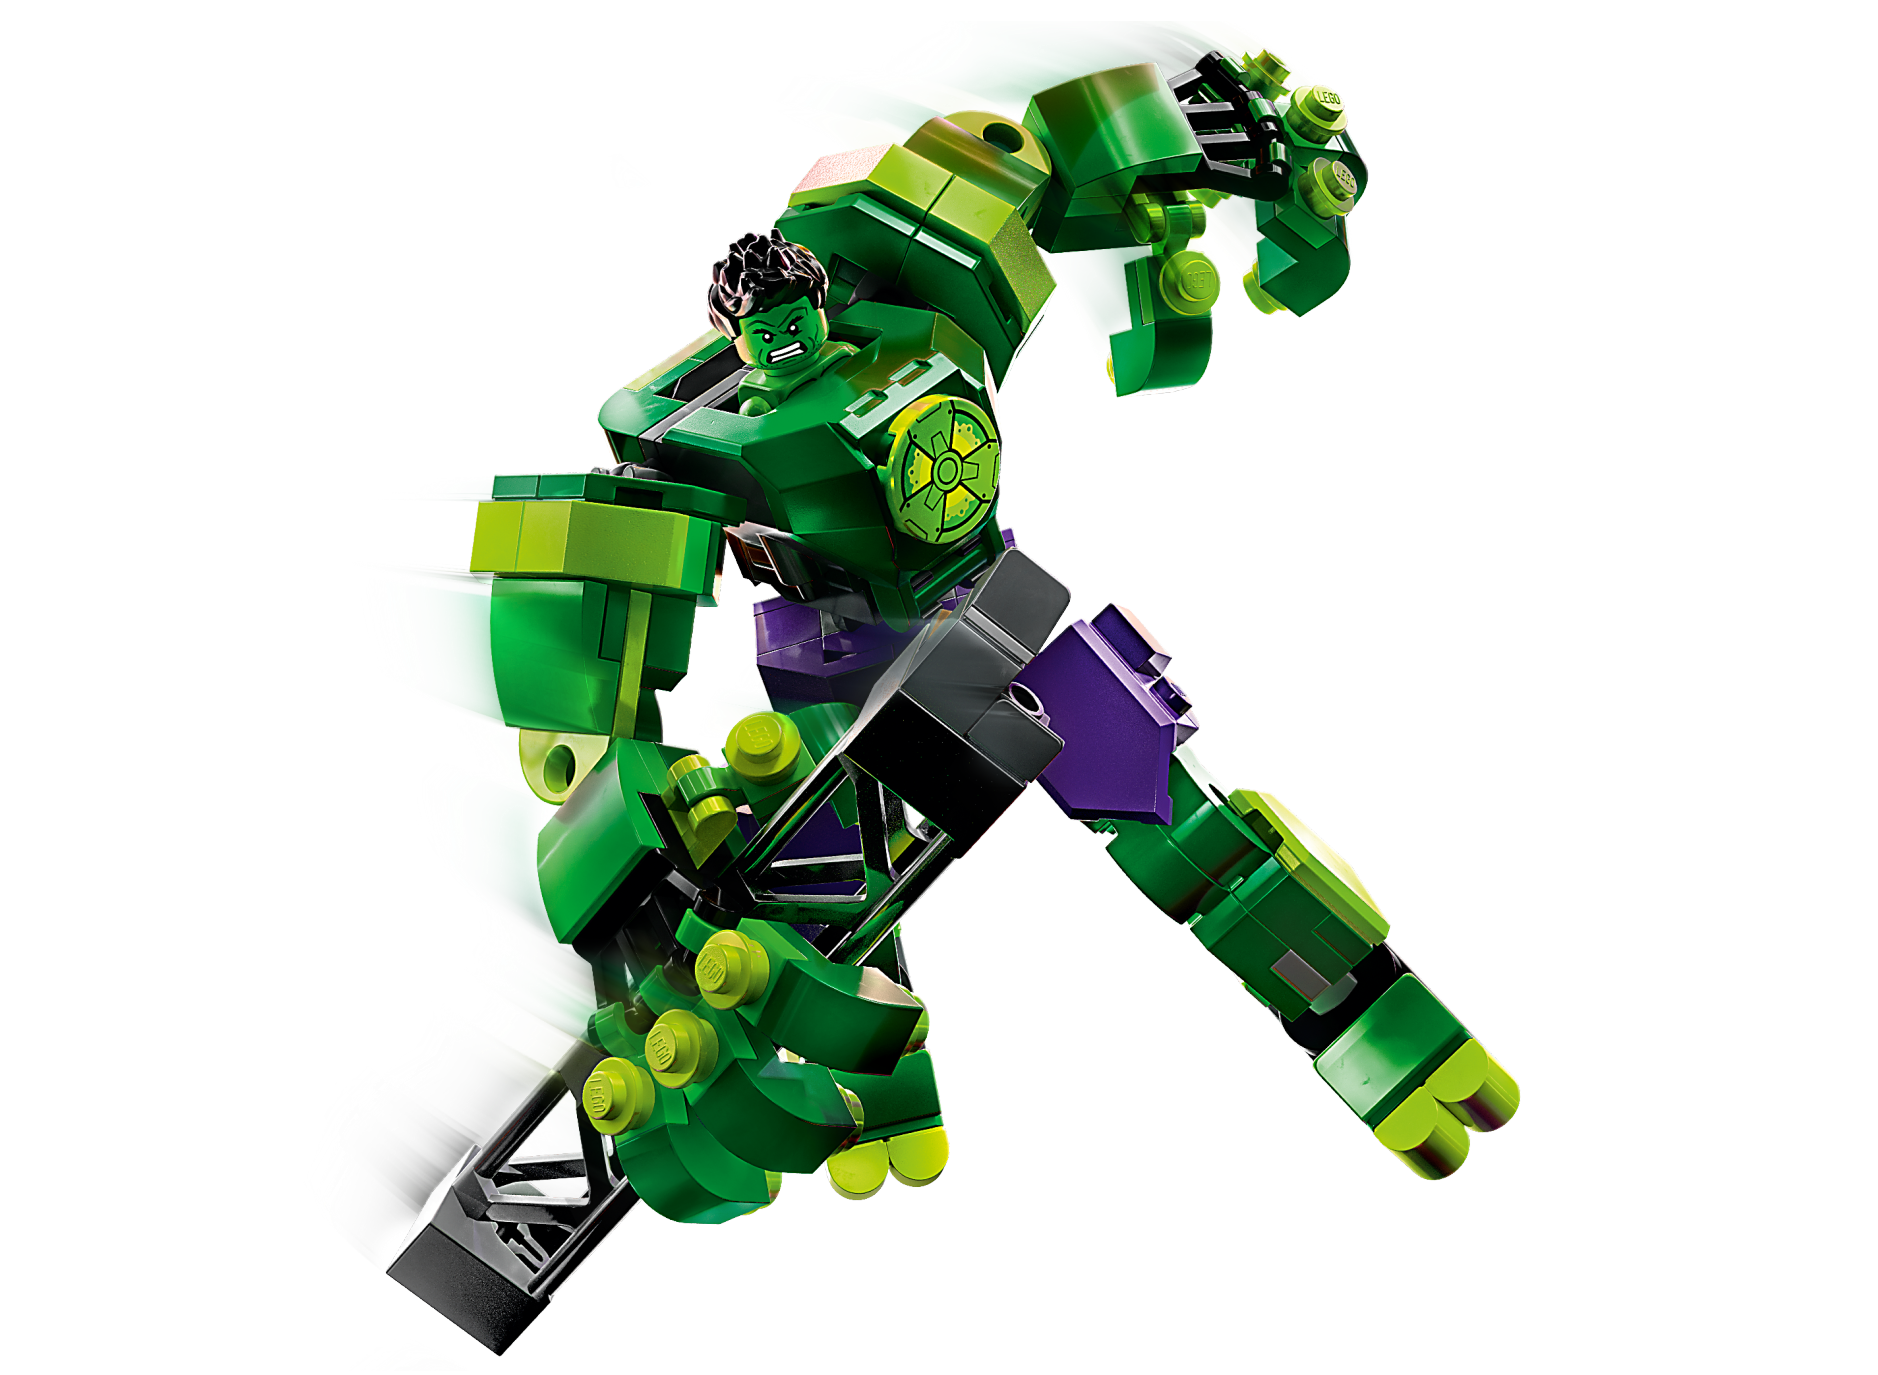 Lego Marvel 76241 Hulk Mech Armor